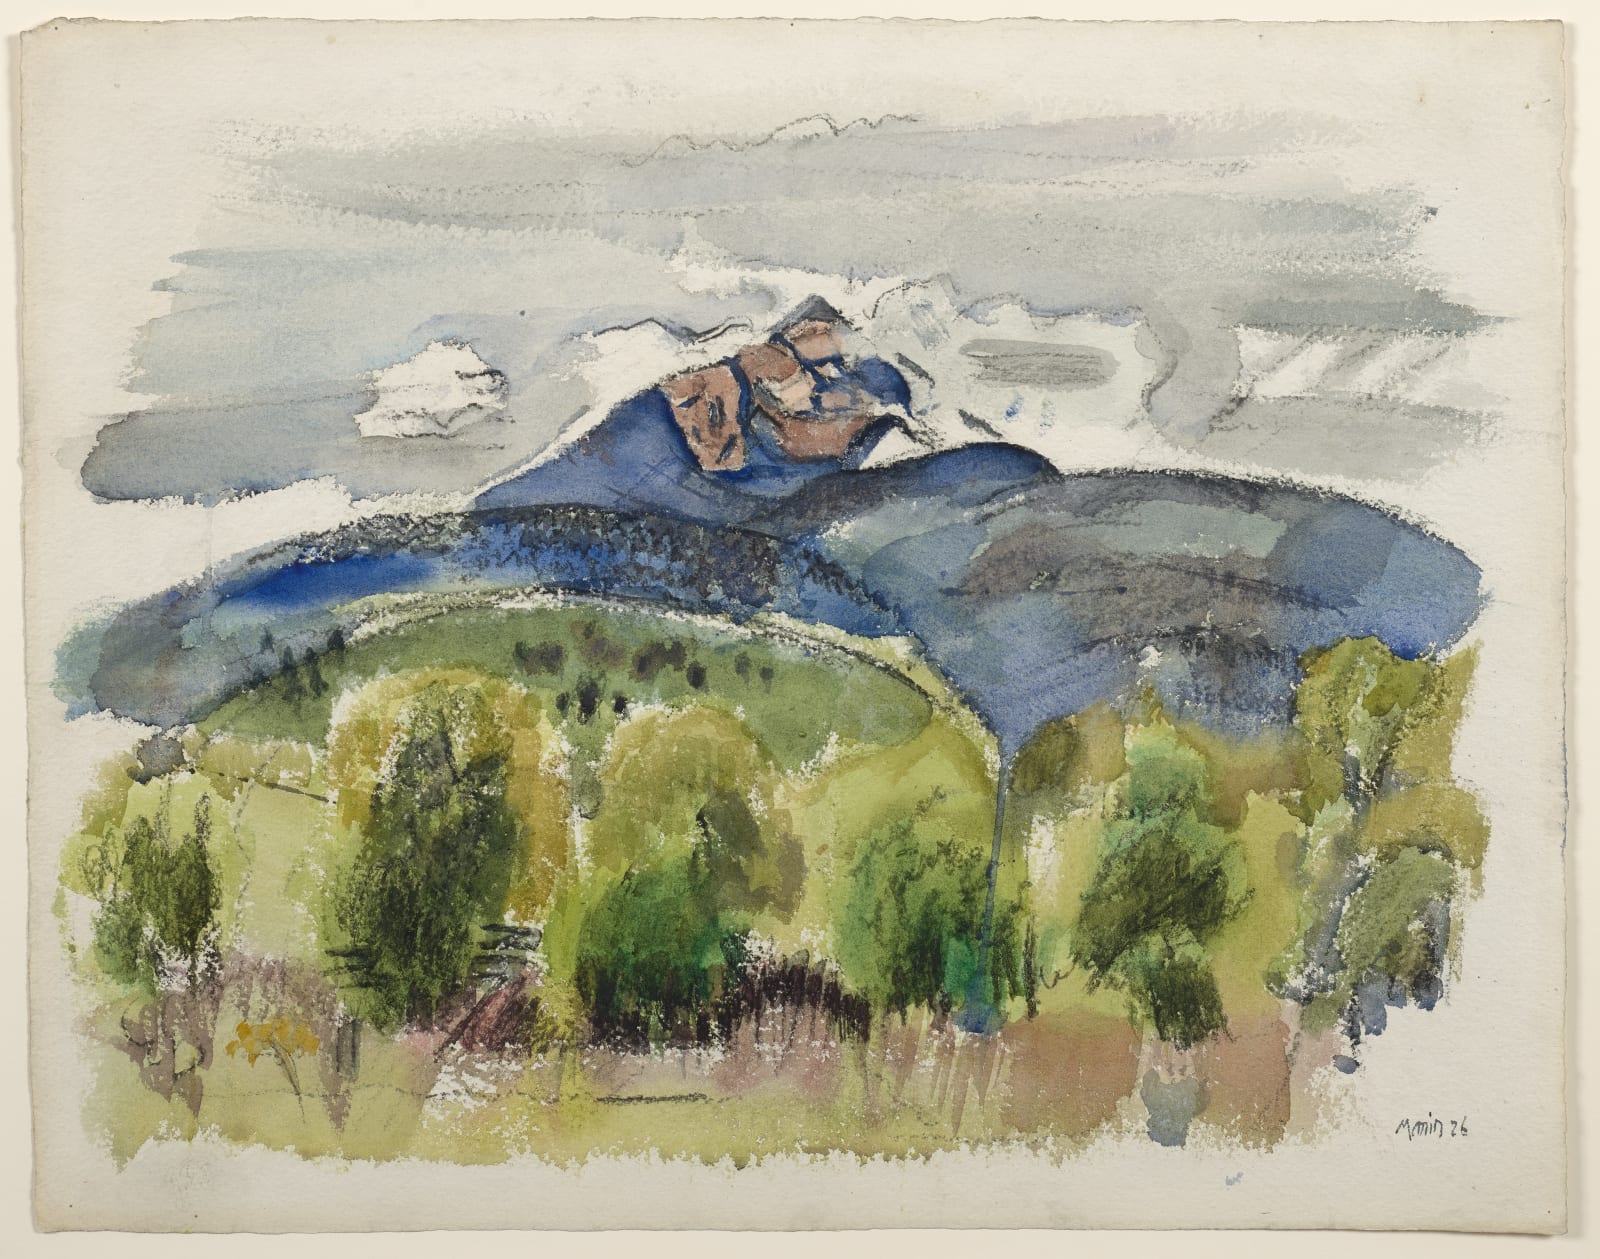 John Marin, Chocorua, White Mountain Series, 1926